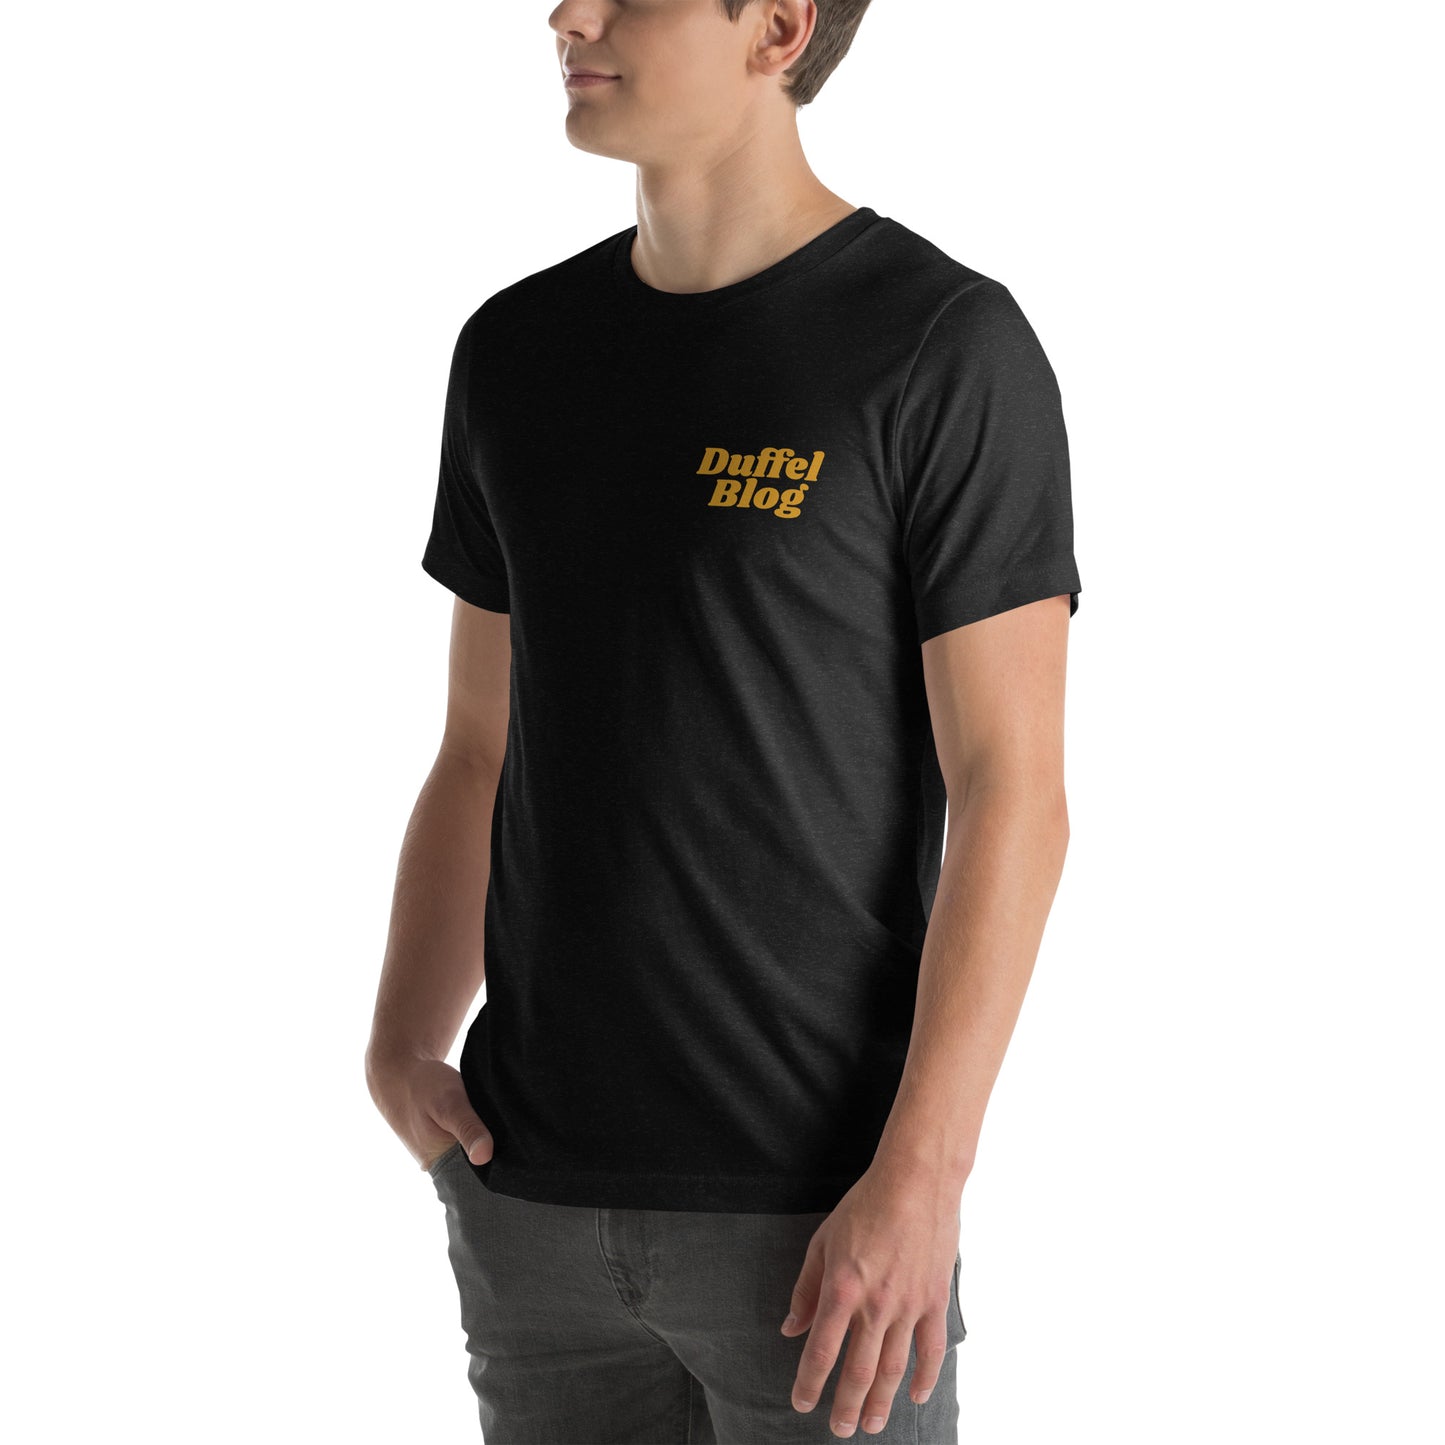 Men's Duffel Blog Retro 'Deployed' shirt